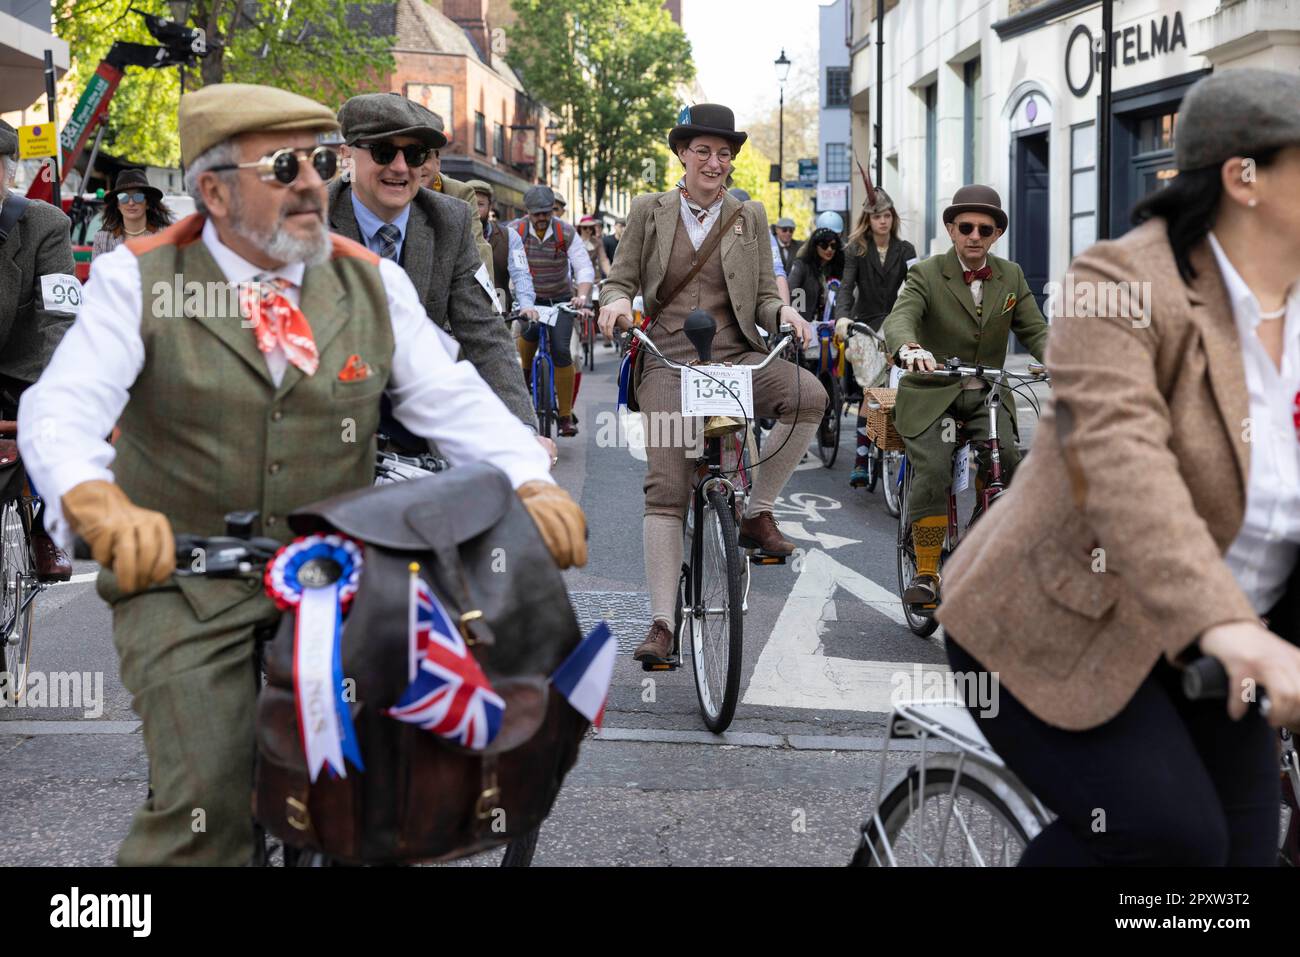 PHOTO:JEFF GILBERT Saturday 29th April 2023. Tweed Run, London, UK People participate in the Tweed Cycle Run, dressed in vintage tweed clothing across Stock Photo